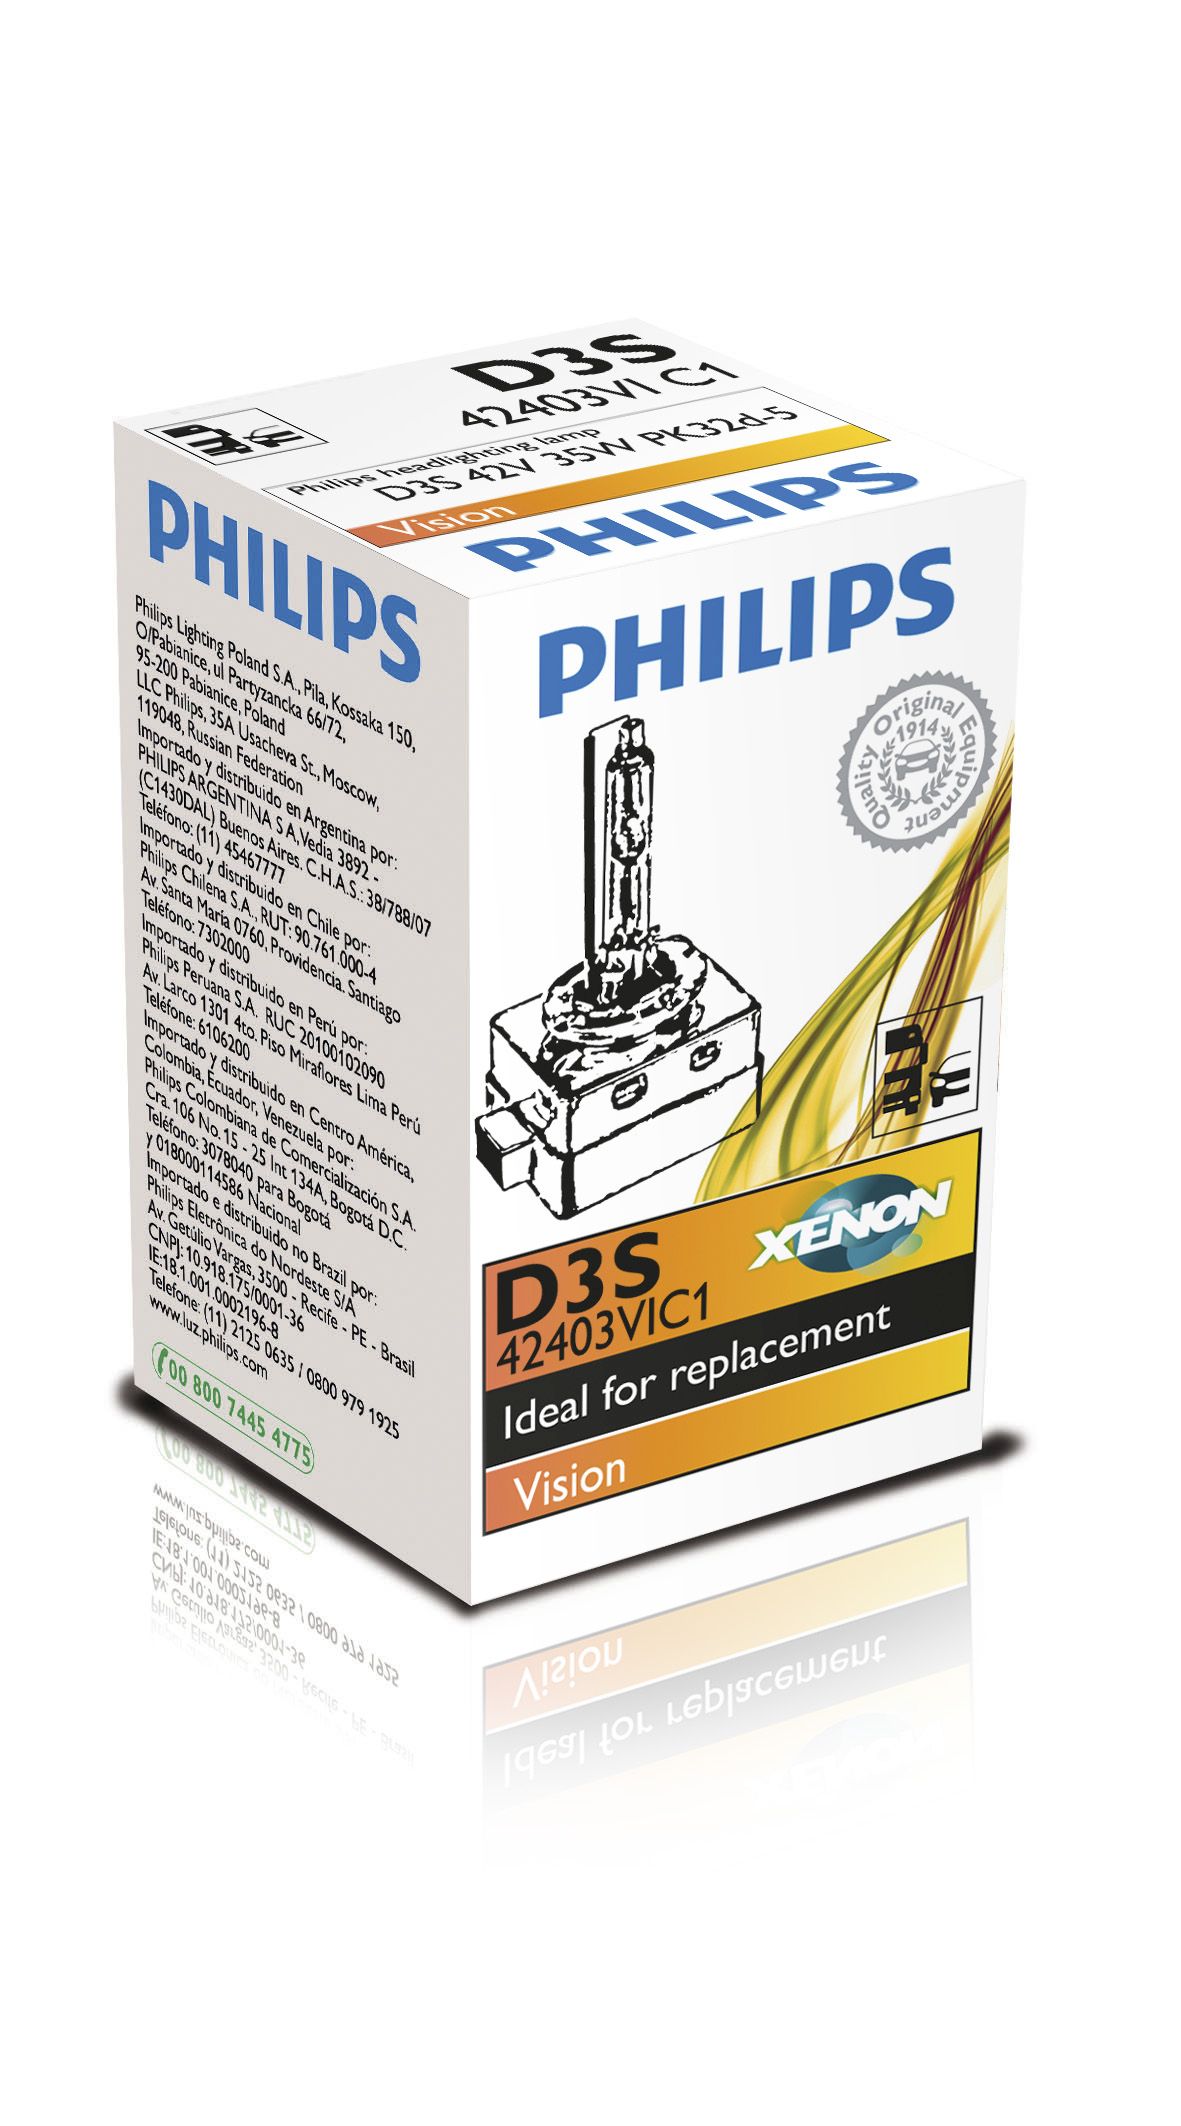 Philips D3S 42403XV2 X-treme Vision gen2 Xenon Brenner